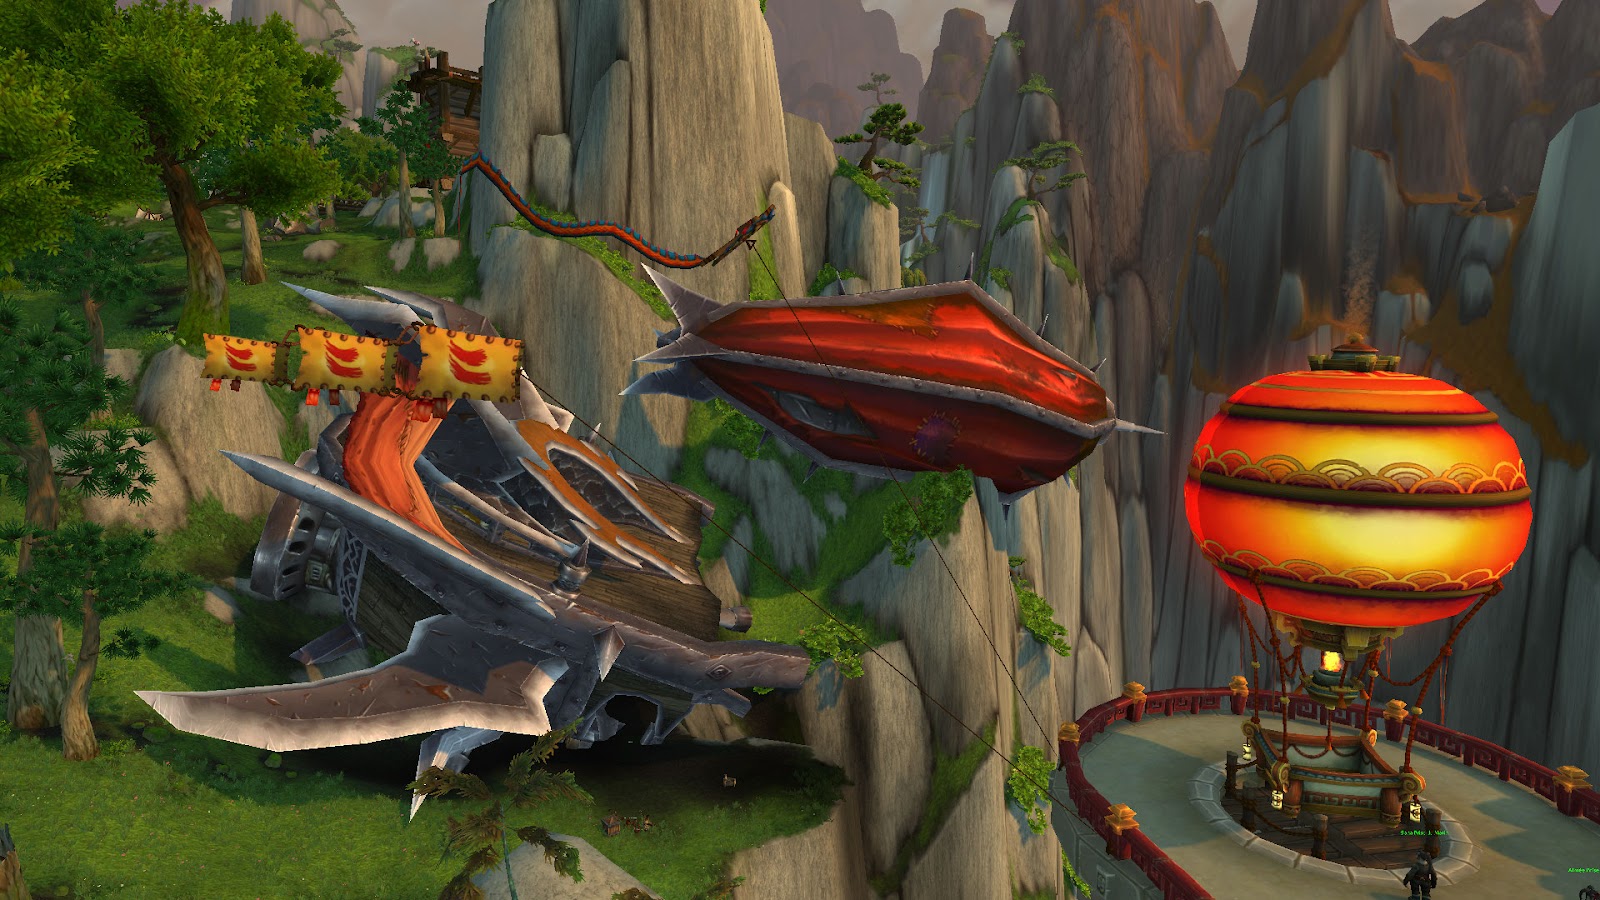 World of Broken Flying Stuff // Source: World of Warcraft Screenshot